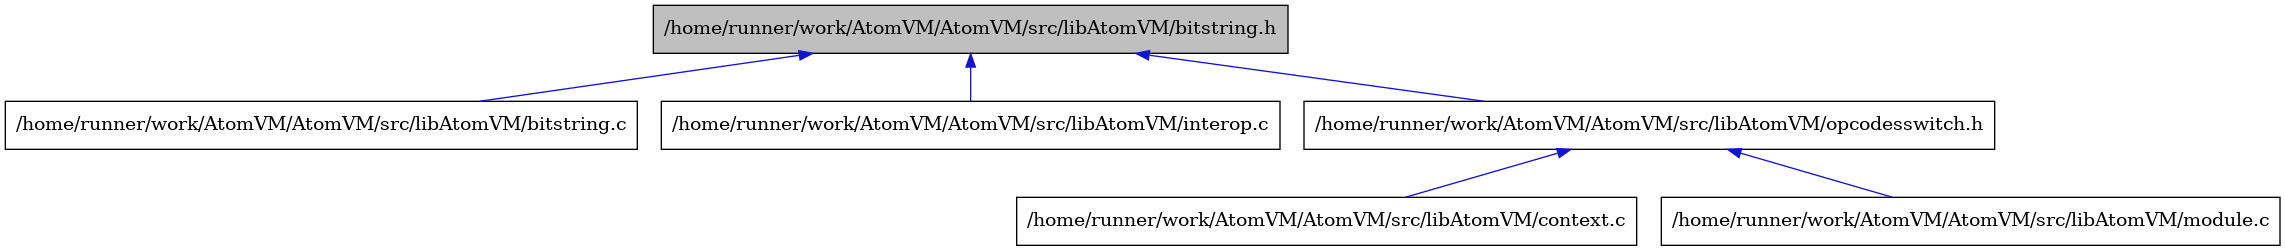 digraph {
    graph [bgcolor="#00000000"]
    node [shape=rectangle style=filled fillcolor="#FFFFFF" font=Helvetica padding=2]
    edge [color="#1414CE"]
    "2" [label="/home/runner/work/AtomVM/AtomVM/src/libAtomVM/bitstring.c" tooltip="/home/runner/work/AtomVM/AtomVM/src/libAtomVM/bitstring.c"]
    "1" [label="/home/runner/work/AtomVM/AtomVM/src/libAtomVM/bitstring.h" tooltip="/home/runner/work/AtomVM/AtomVM/src/libAtomVM/bitstring.h" fillcolor="#BFBFBF"]
    "5" [label="/home/runner/work/AtomVM/AtomVM/src/libAtomVM/context.c" tooltip="/home/runner/work/AtomVM/AtomVM/src/libAtomVM/context.c"]
    "6" [label="/home/runner/work/AtomVM/AtomVM/src/libAtomVM/module.c" tooltip="/home/runner/work/AtomVM/AtomVM/src/libAtomVM/module.c"]
    "3" [label="/home/runner/work/AtomVM/AtomVM/src/libAtomVM/interop.c" tooltip="/home/runner/work/AtomVM/AtomVM/src/libAtomVM/interop.c"]
    "4" [label="/home/runner/work/AtomVM/AtomVM/src/libAtomVM/opcodesswitch.h" tooltip="/home/runner/work/AtomVM/AtomVM/src/libAtomVM/opcodesswitch.h"]
    "1" -> "2" [dir=back tooltip="include"]
    "1" -> "3" [dir=back tooltip="include"]
    "1" -> "4" [dir=back tooltip="include"]
    "4" -> "5" [dir=back tooltip="include"]
    "4" -> "6" [dir=back tooltip="include"]
}